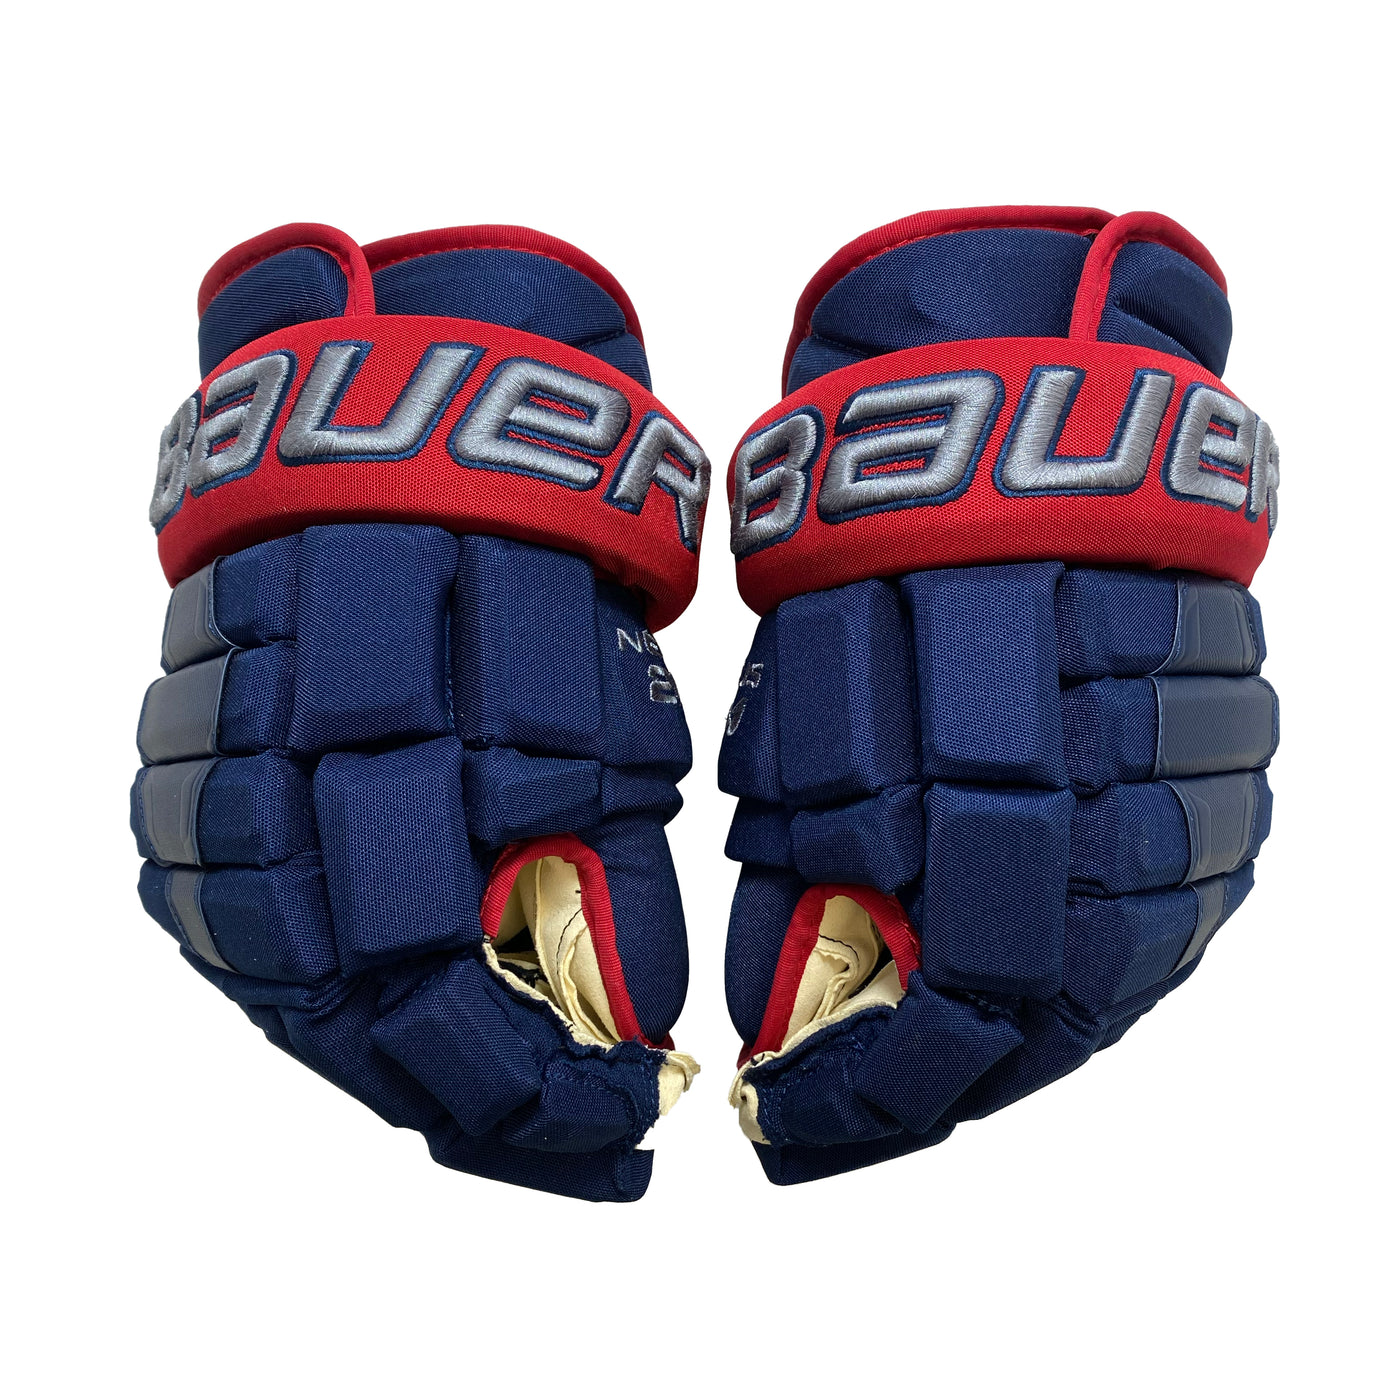 Bauer 2NPro - Columbus Blue Jackets - Pro Stock Hockey Gloves - Boone Jenner